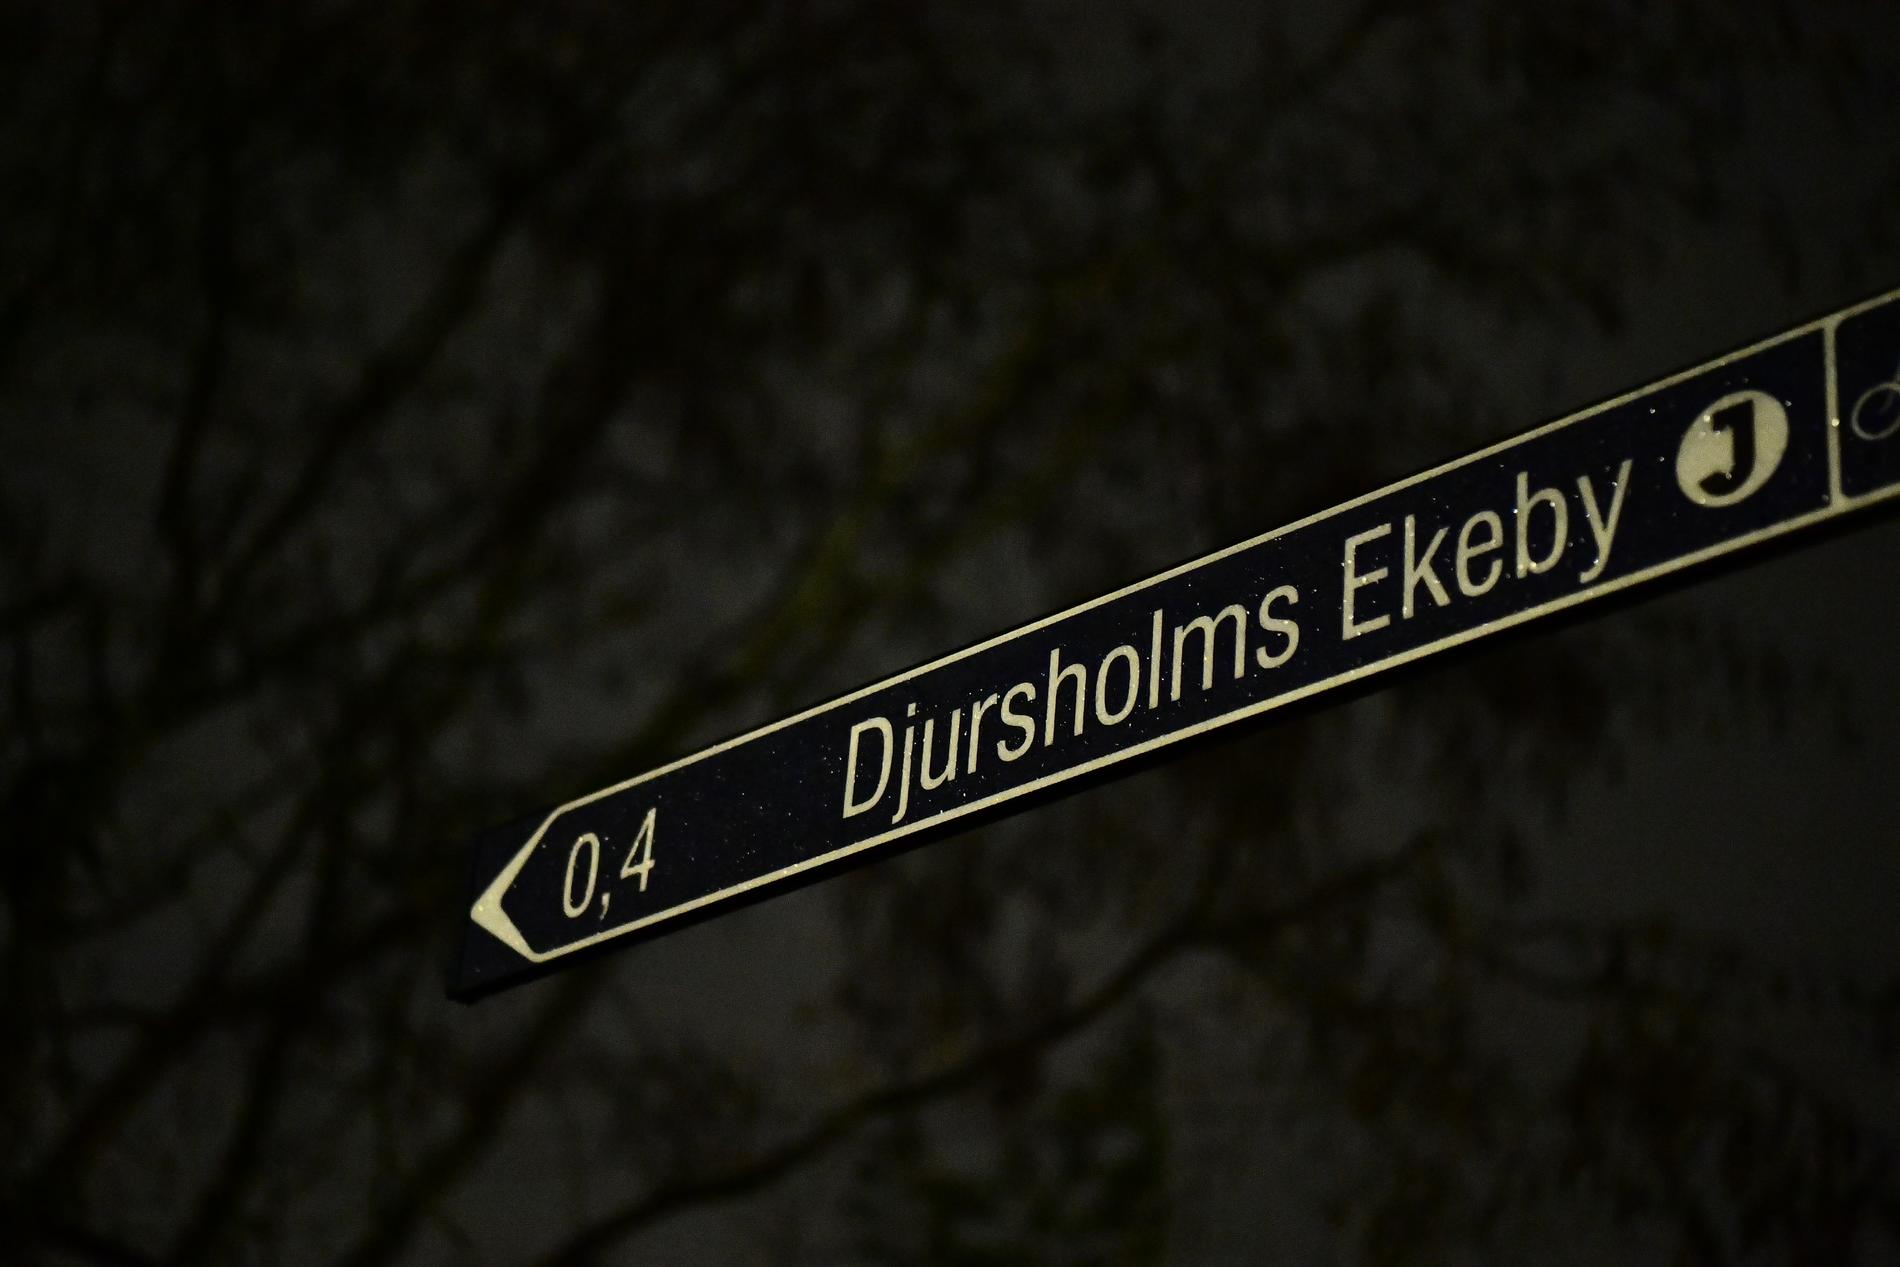 Det var vid halv nio som det knackade på hemma hos offret i Djursholms Ekeby.